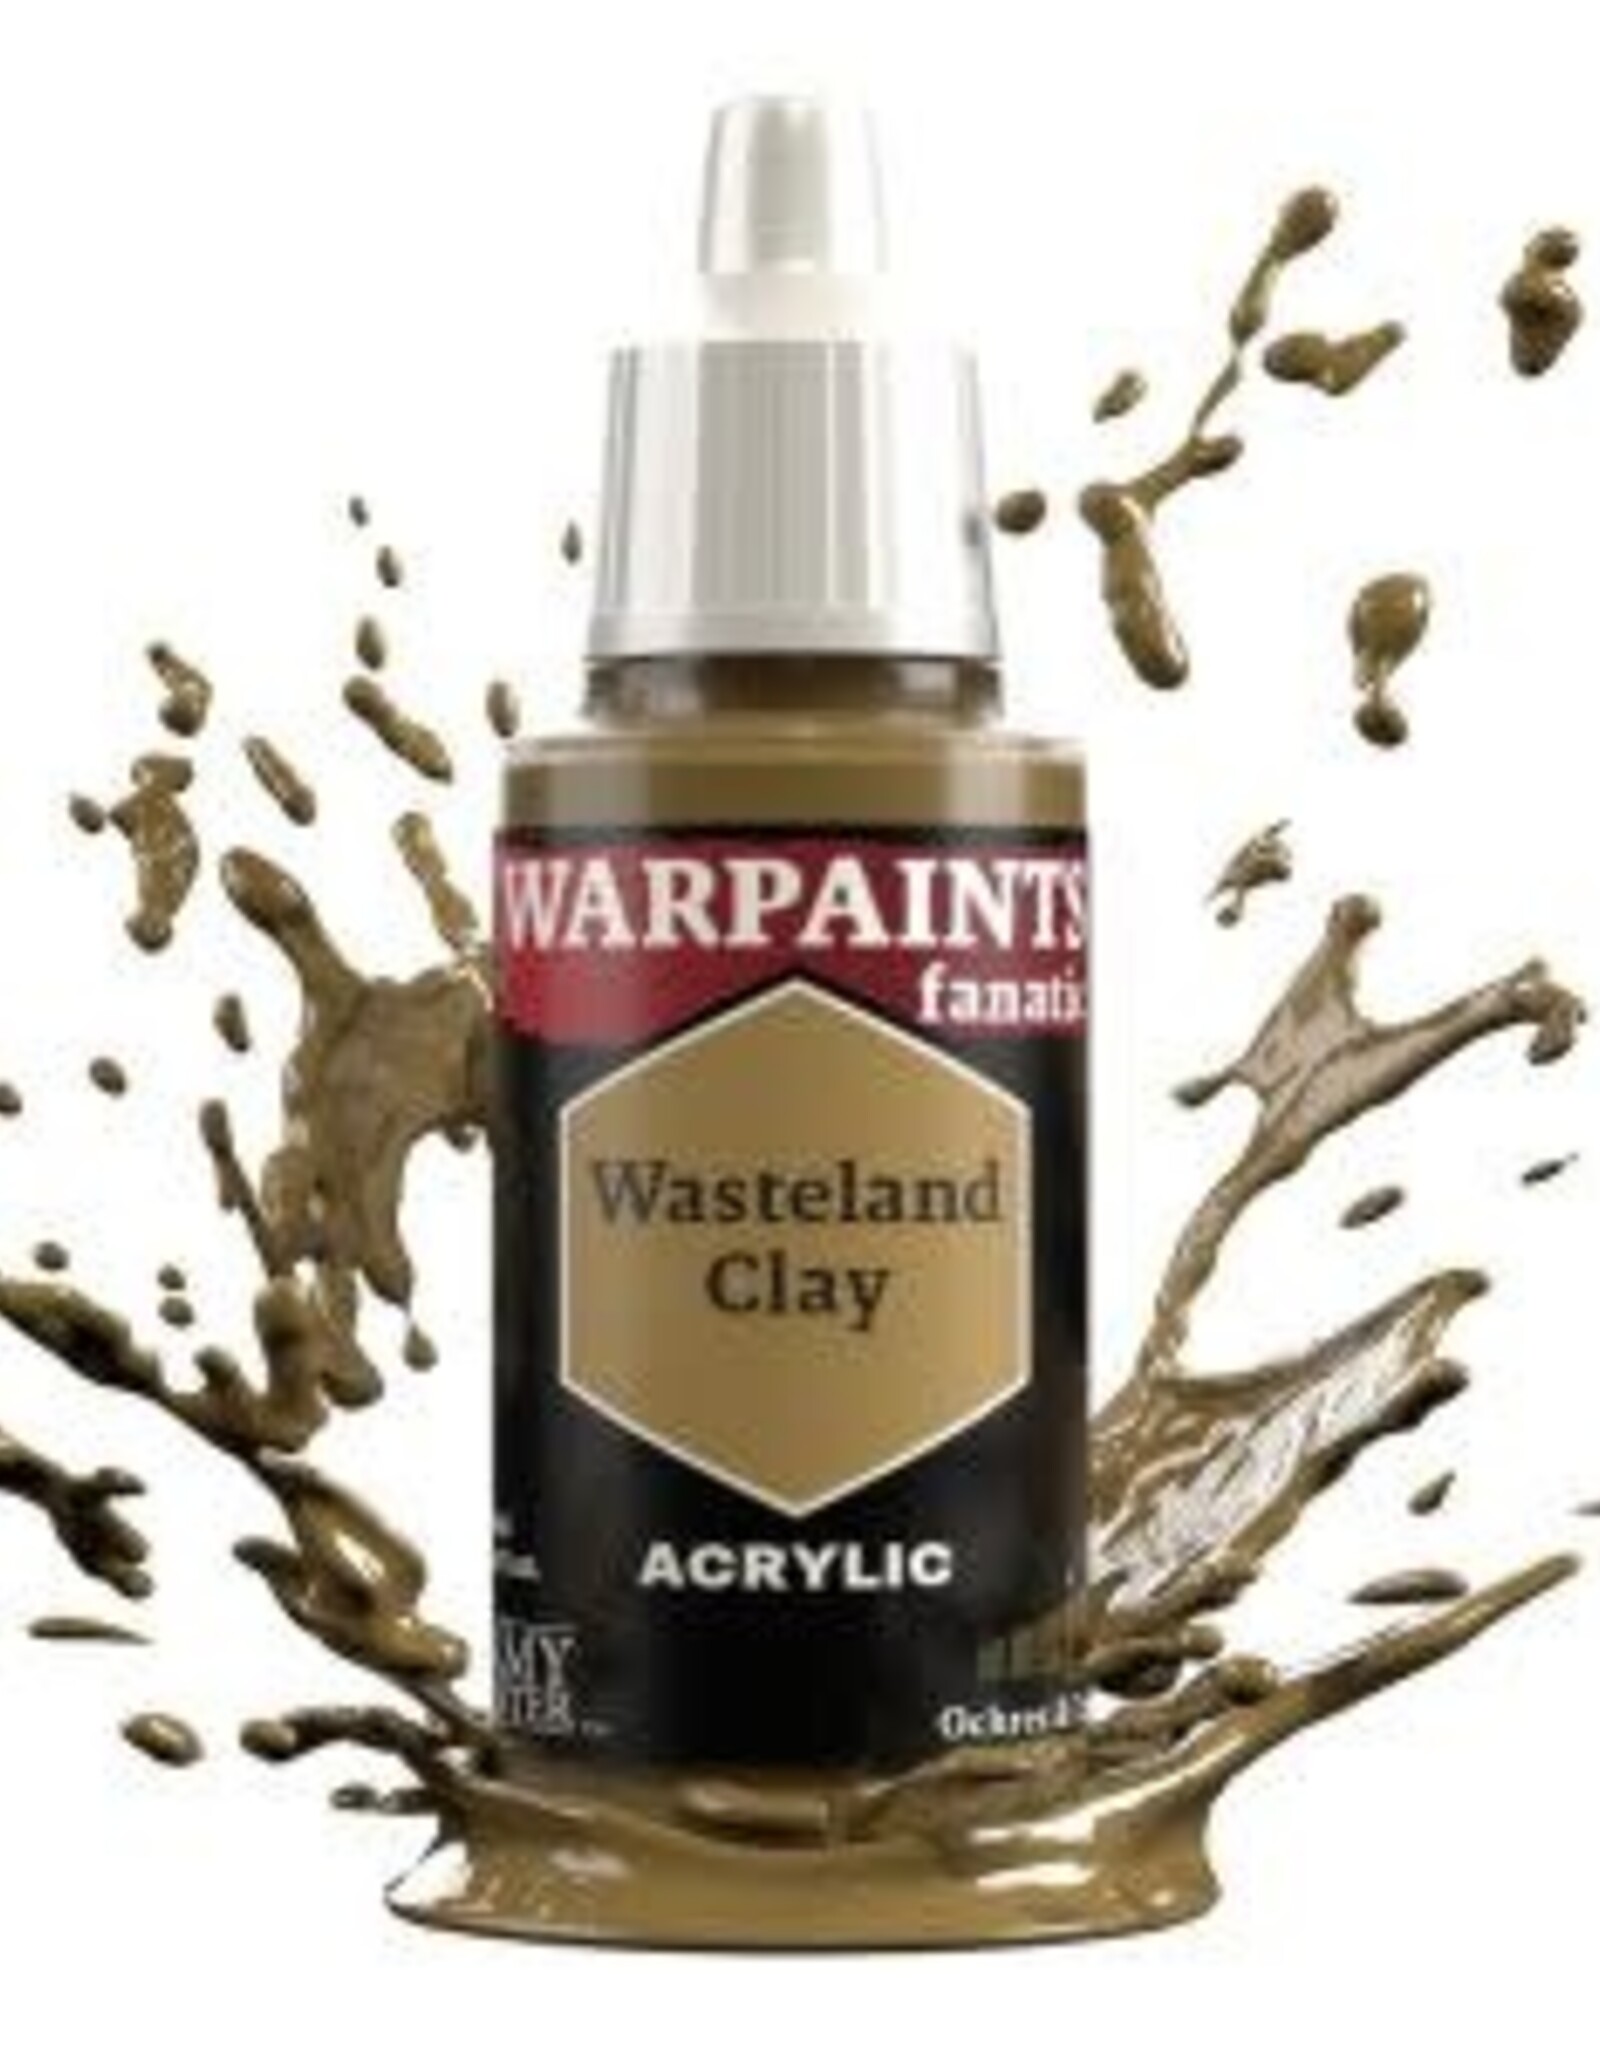 Warpaints Fanatic: Wasteland Clay